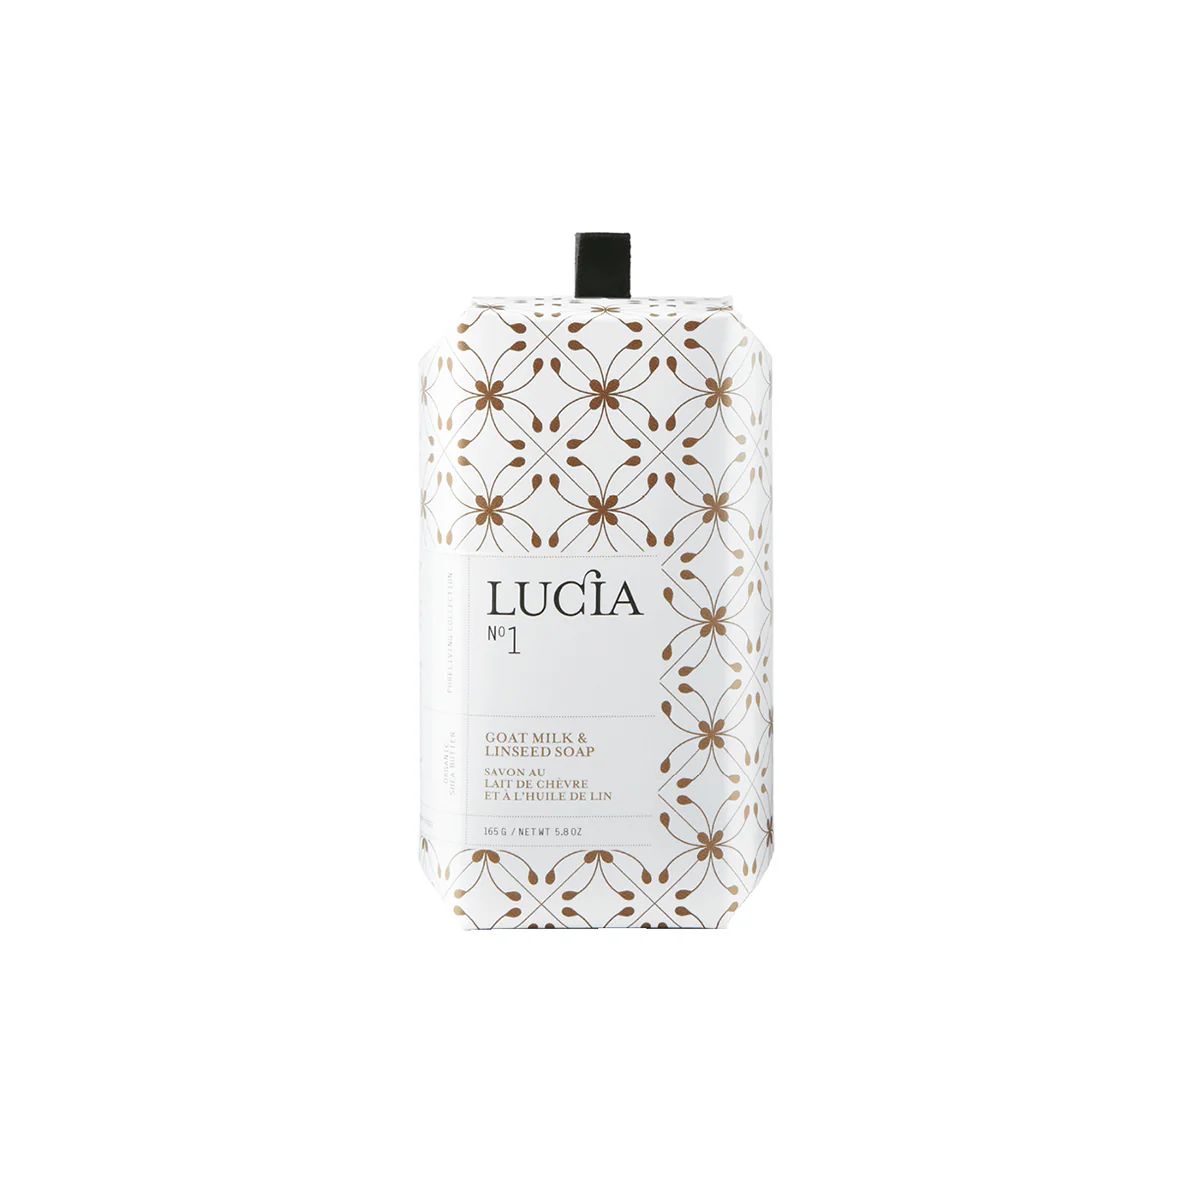 Lucia Bar Soap | Tuesday Made